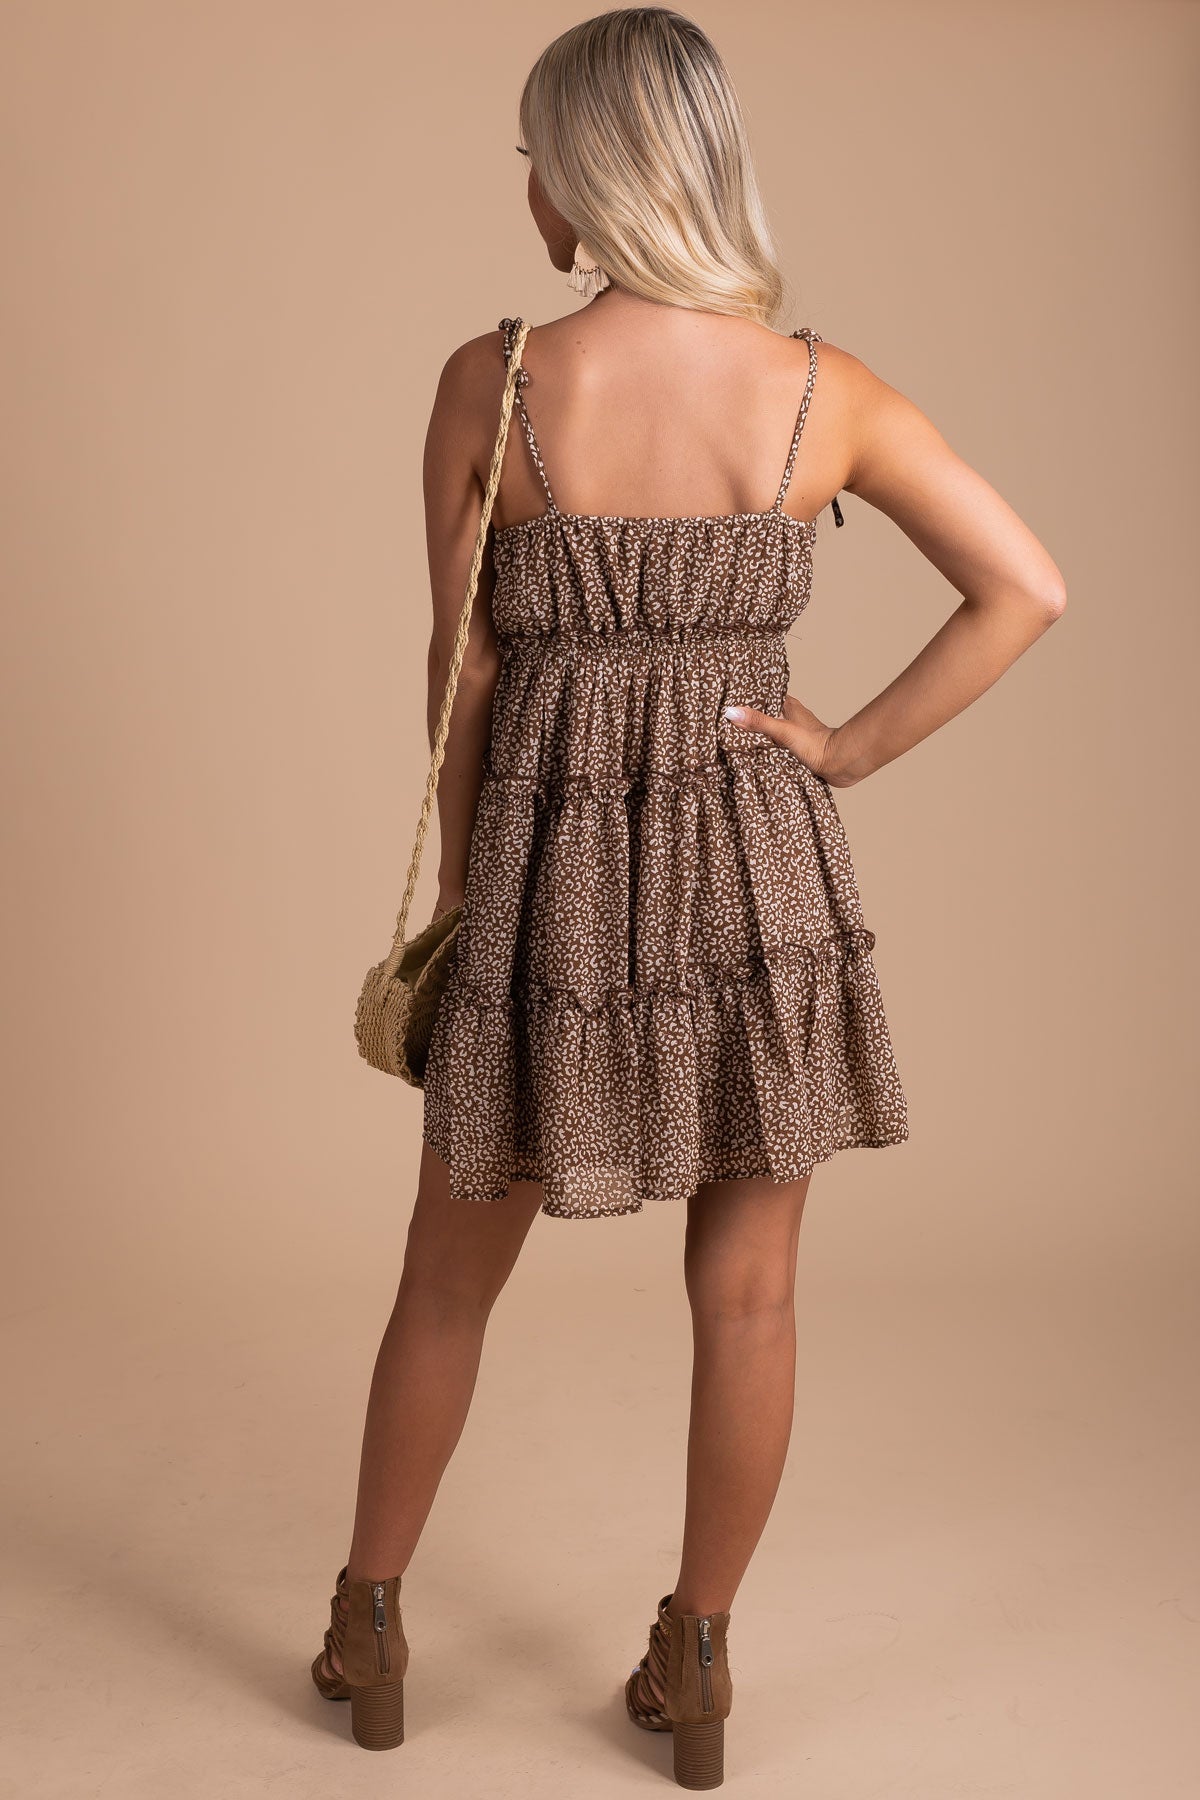 Fierce Look Leopard Dress - Brown, Fashion Nova, Dresses